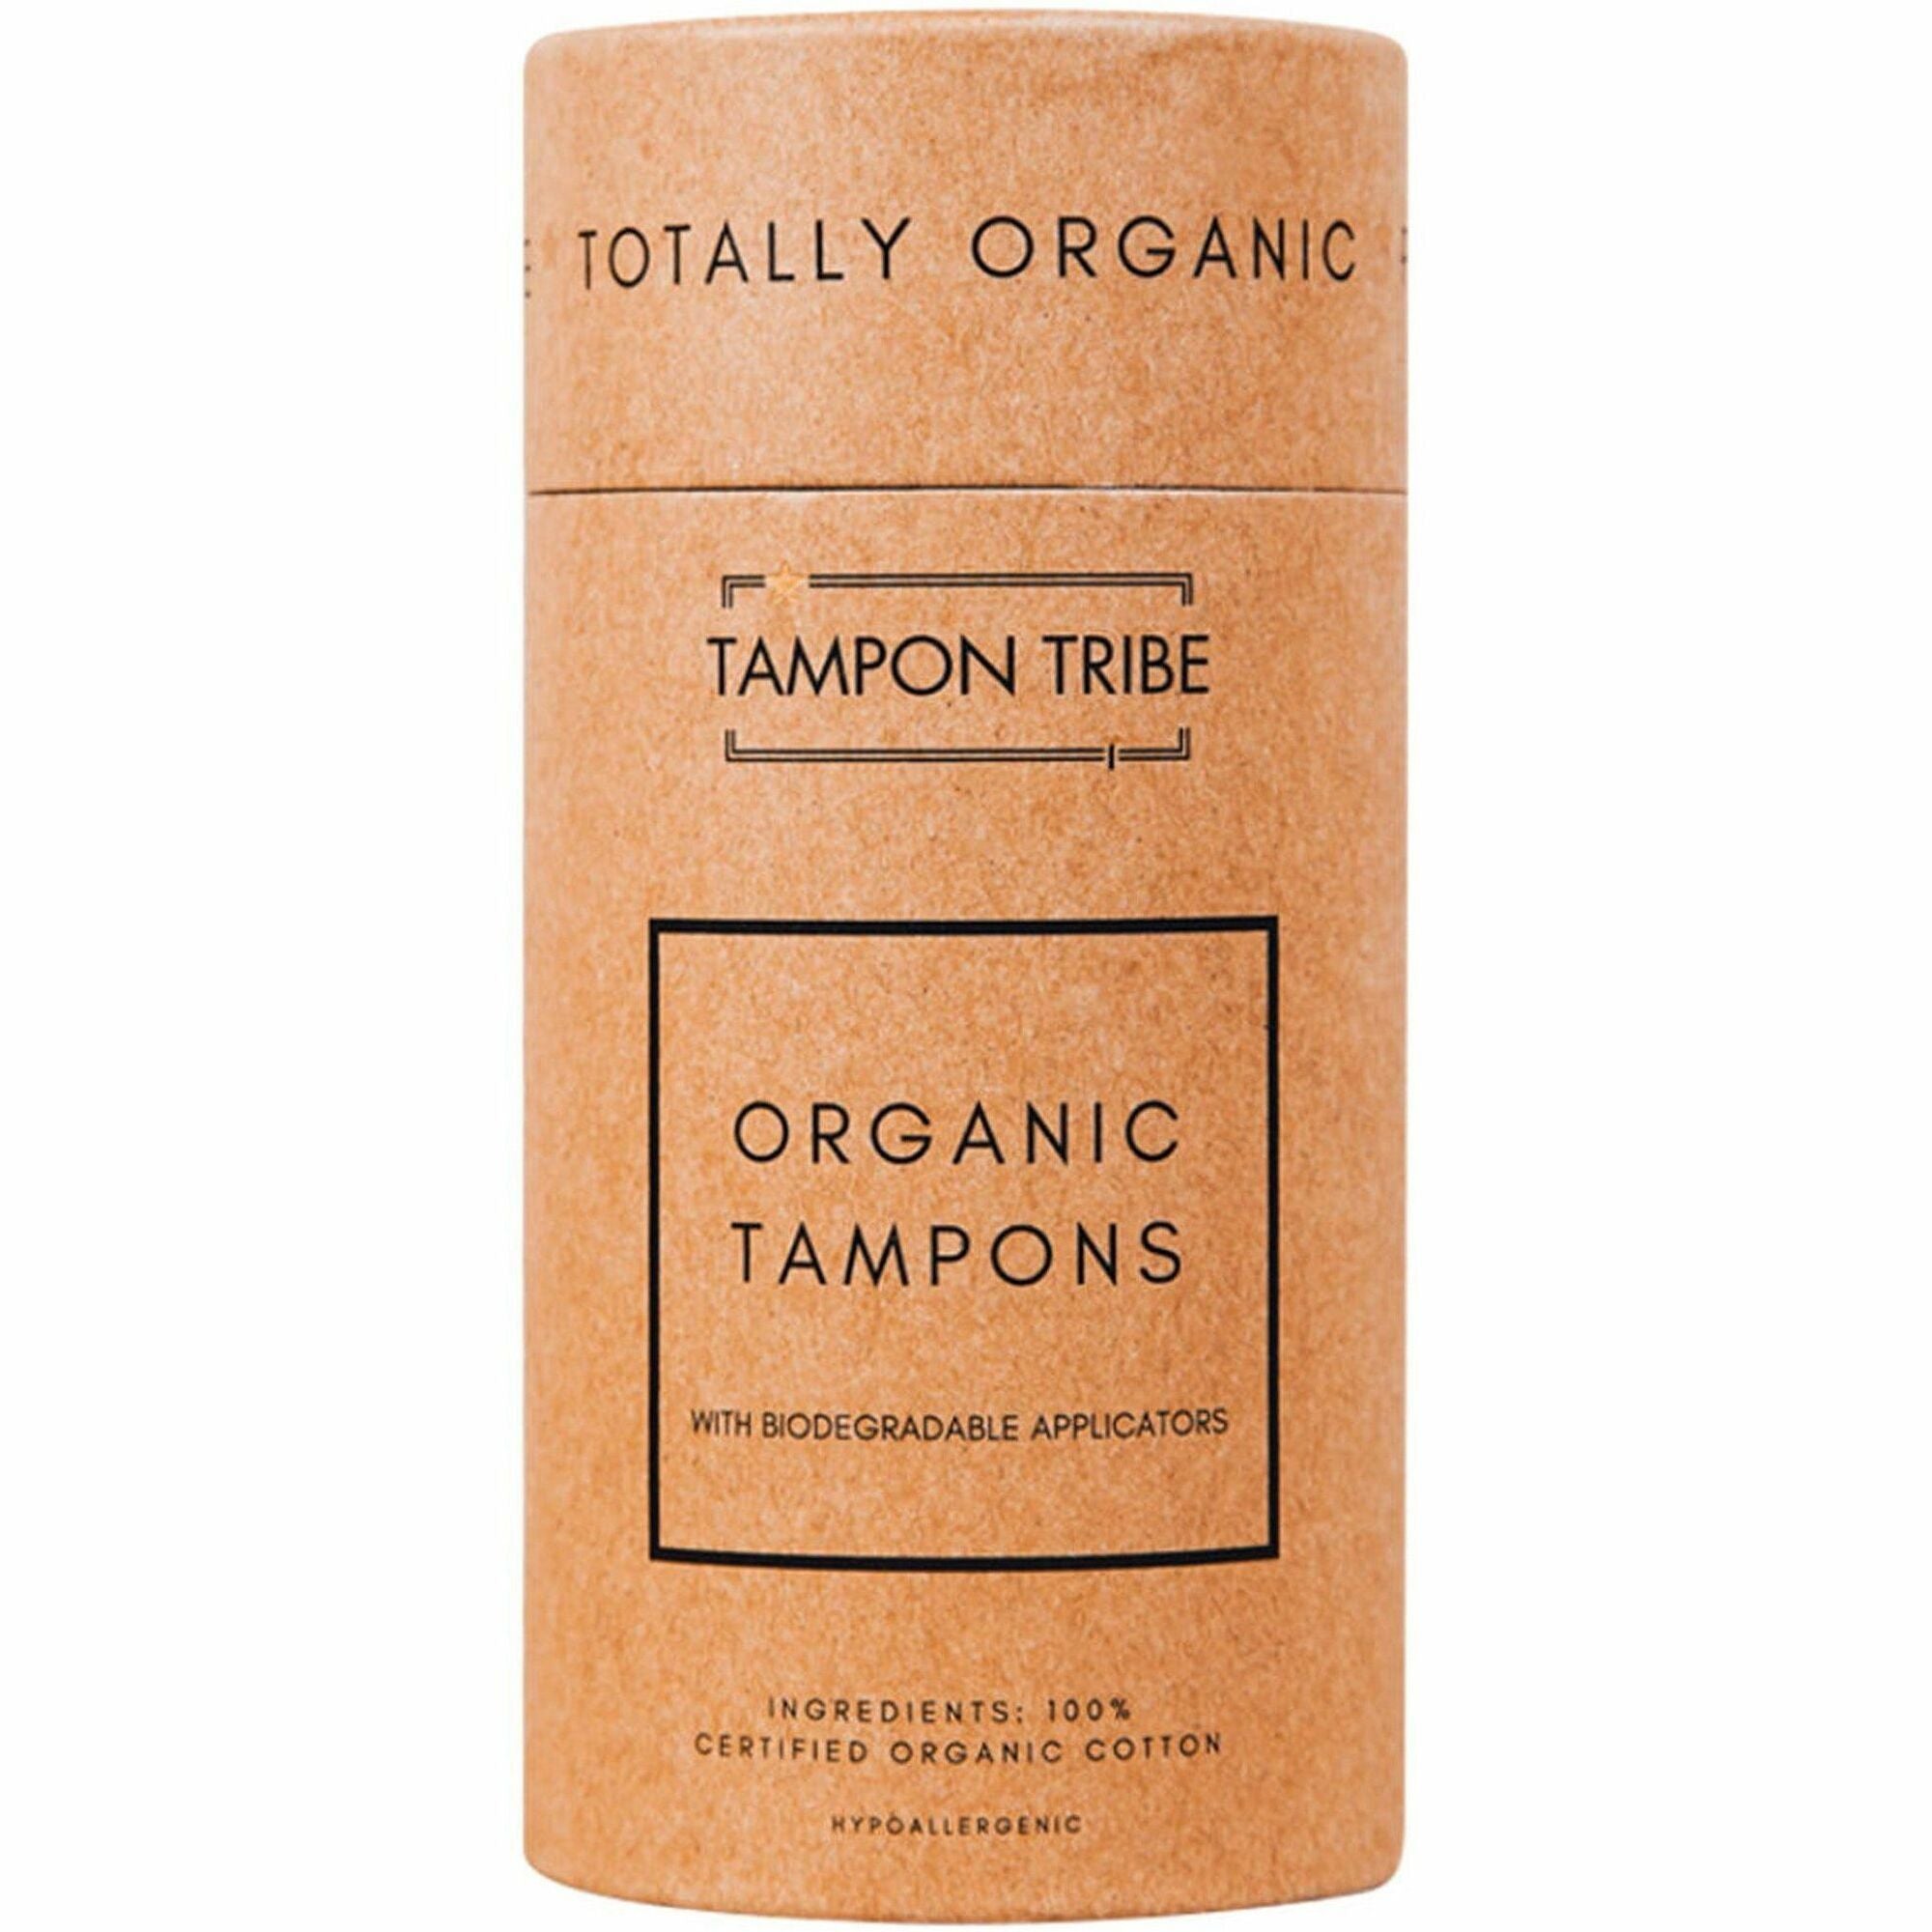 Tampon Tribe Tampon Tubes - 6 / Carton - Natural Brown - Paper